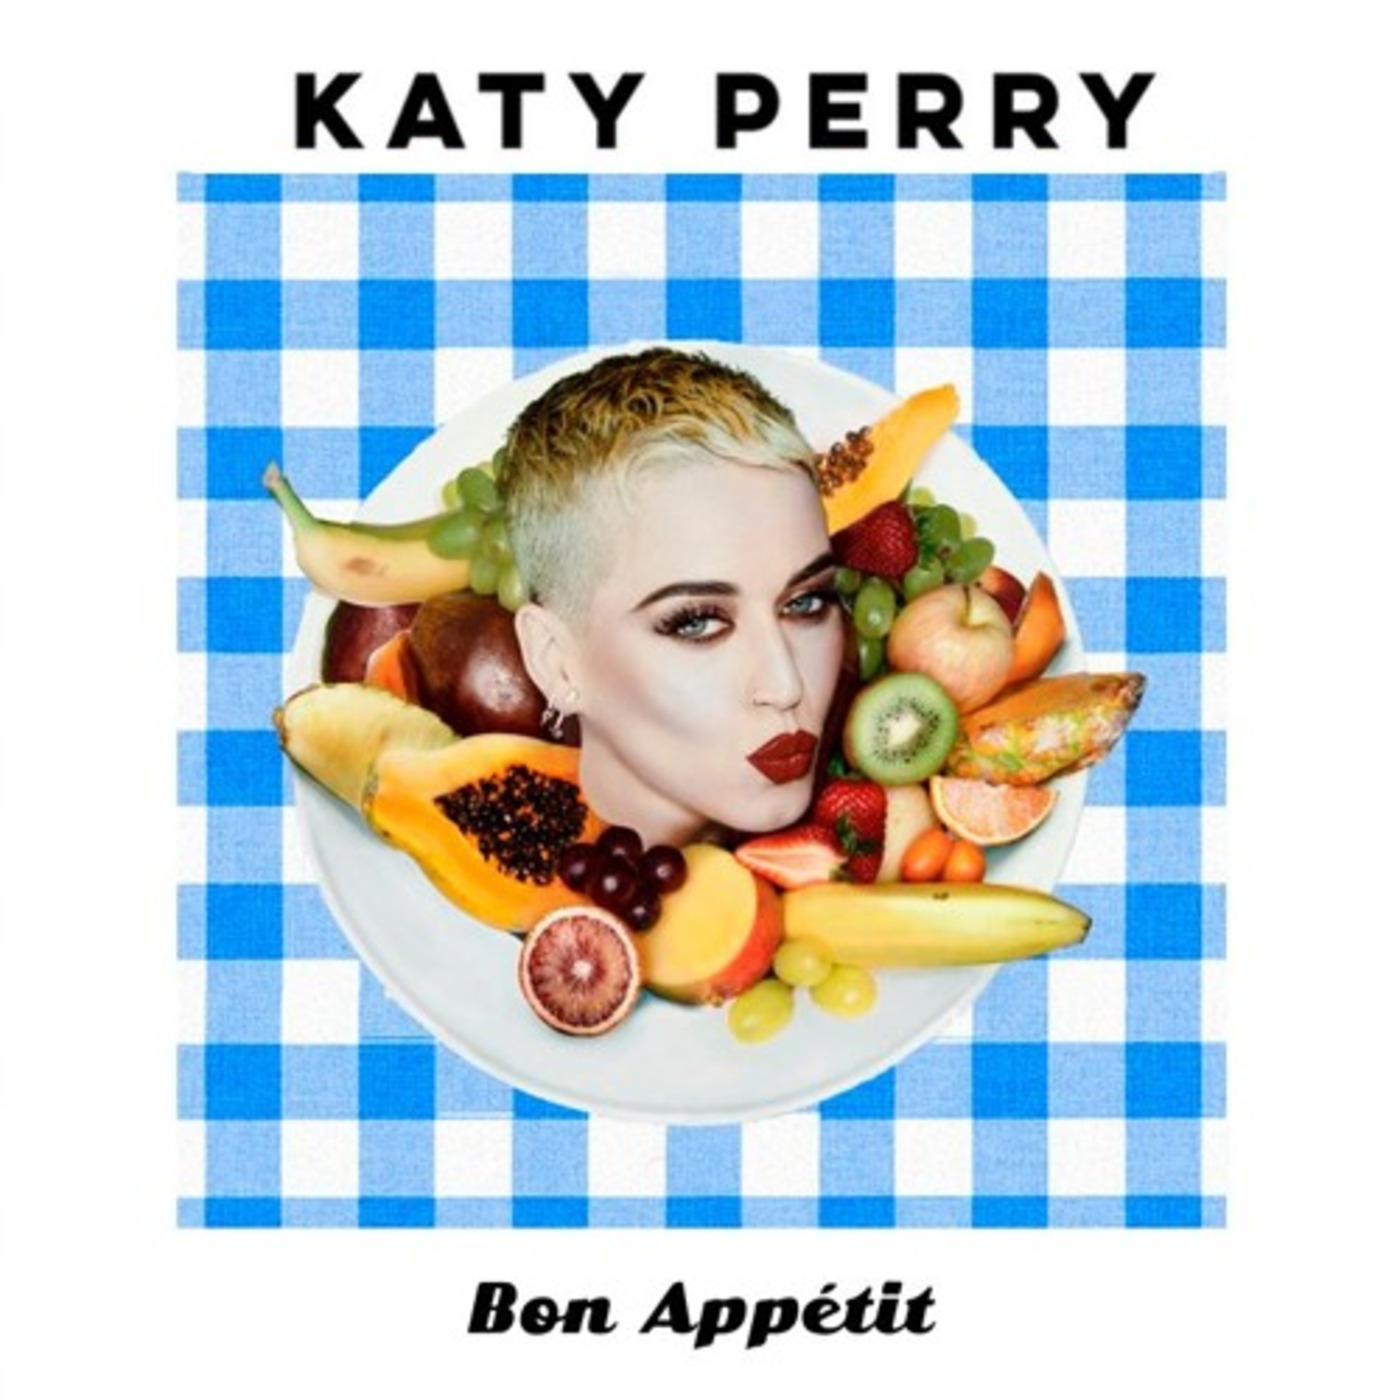 Katy perry appetit remix image